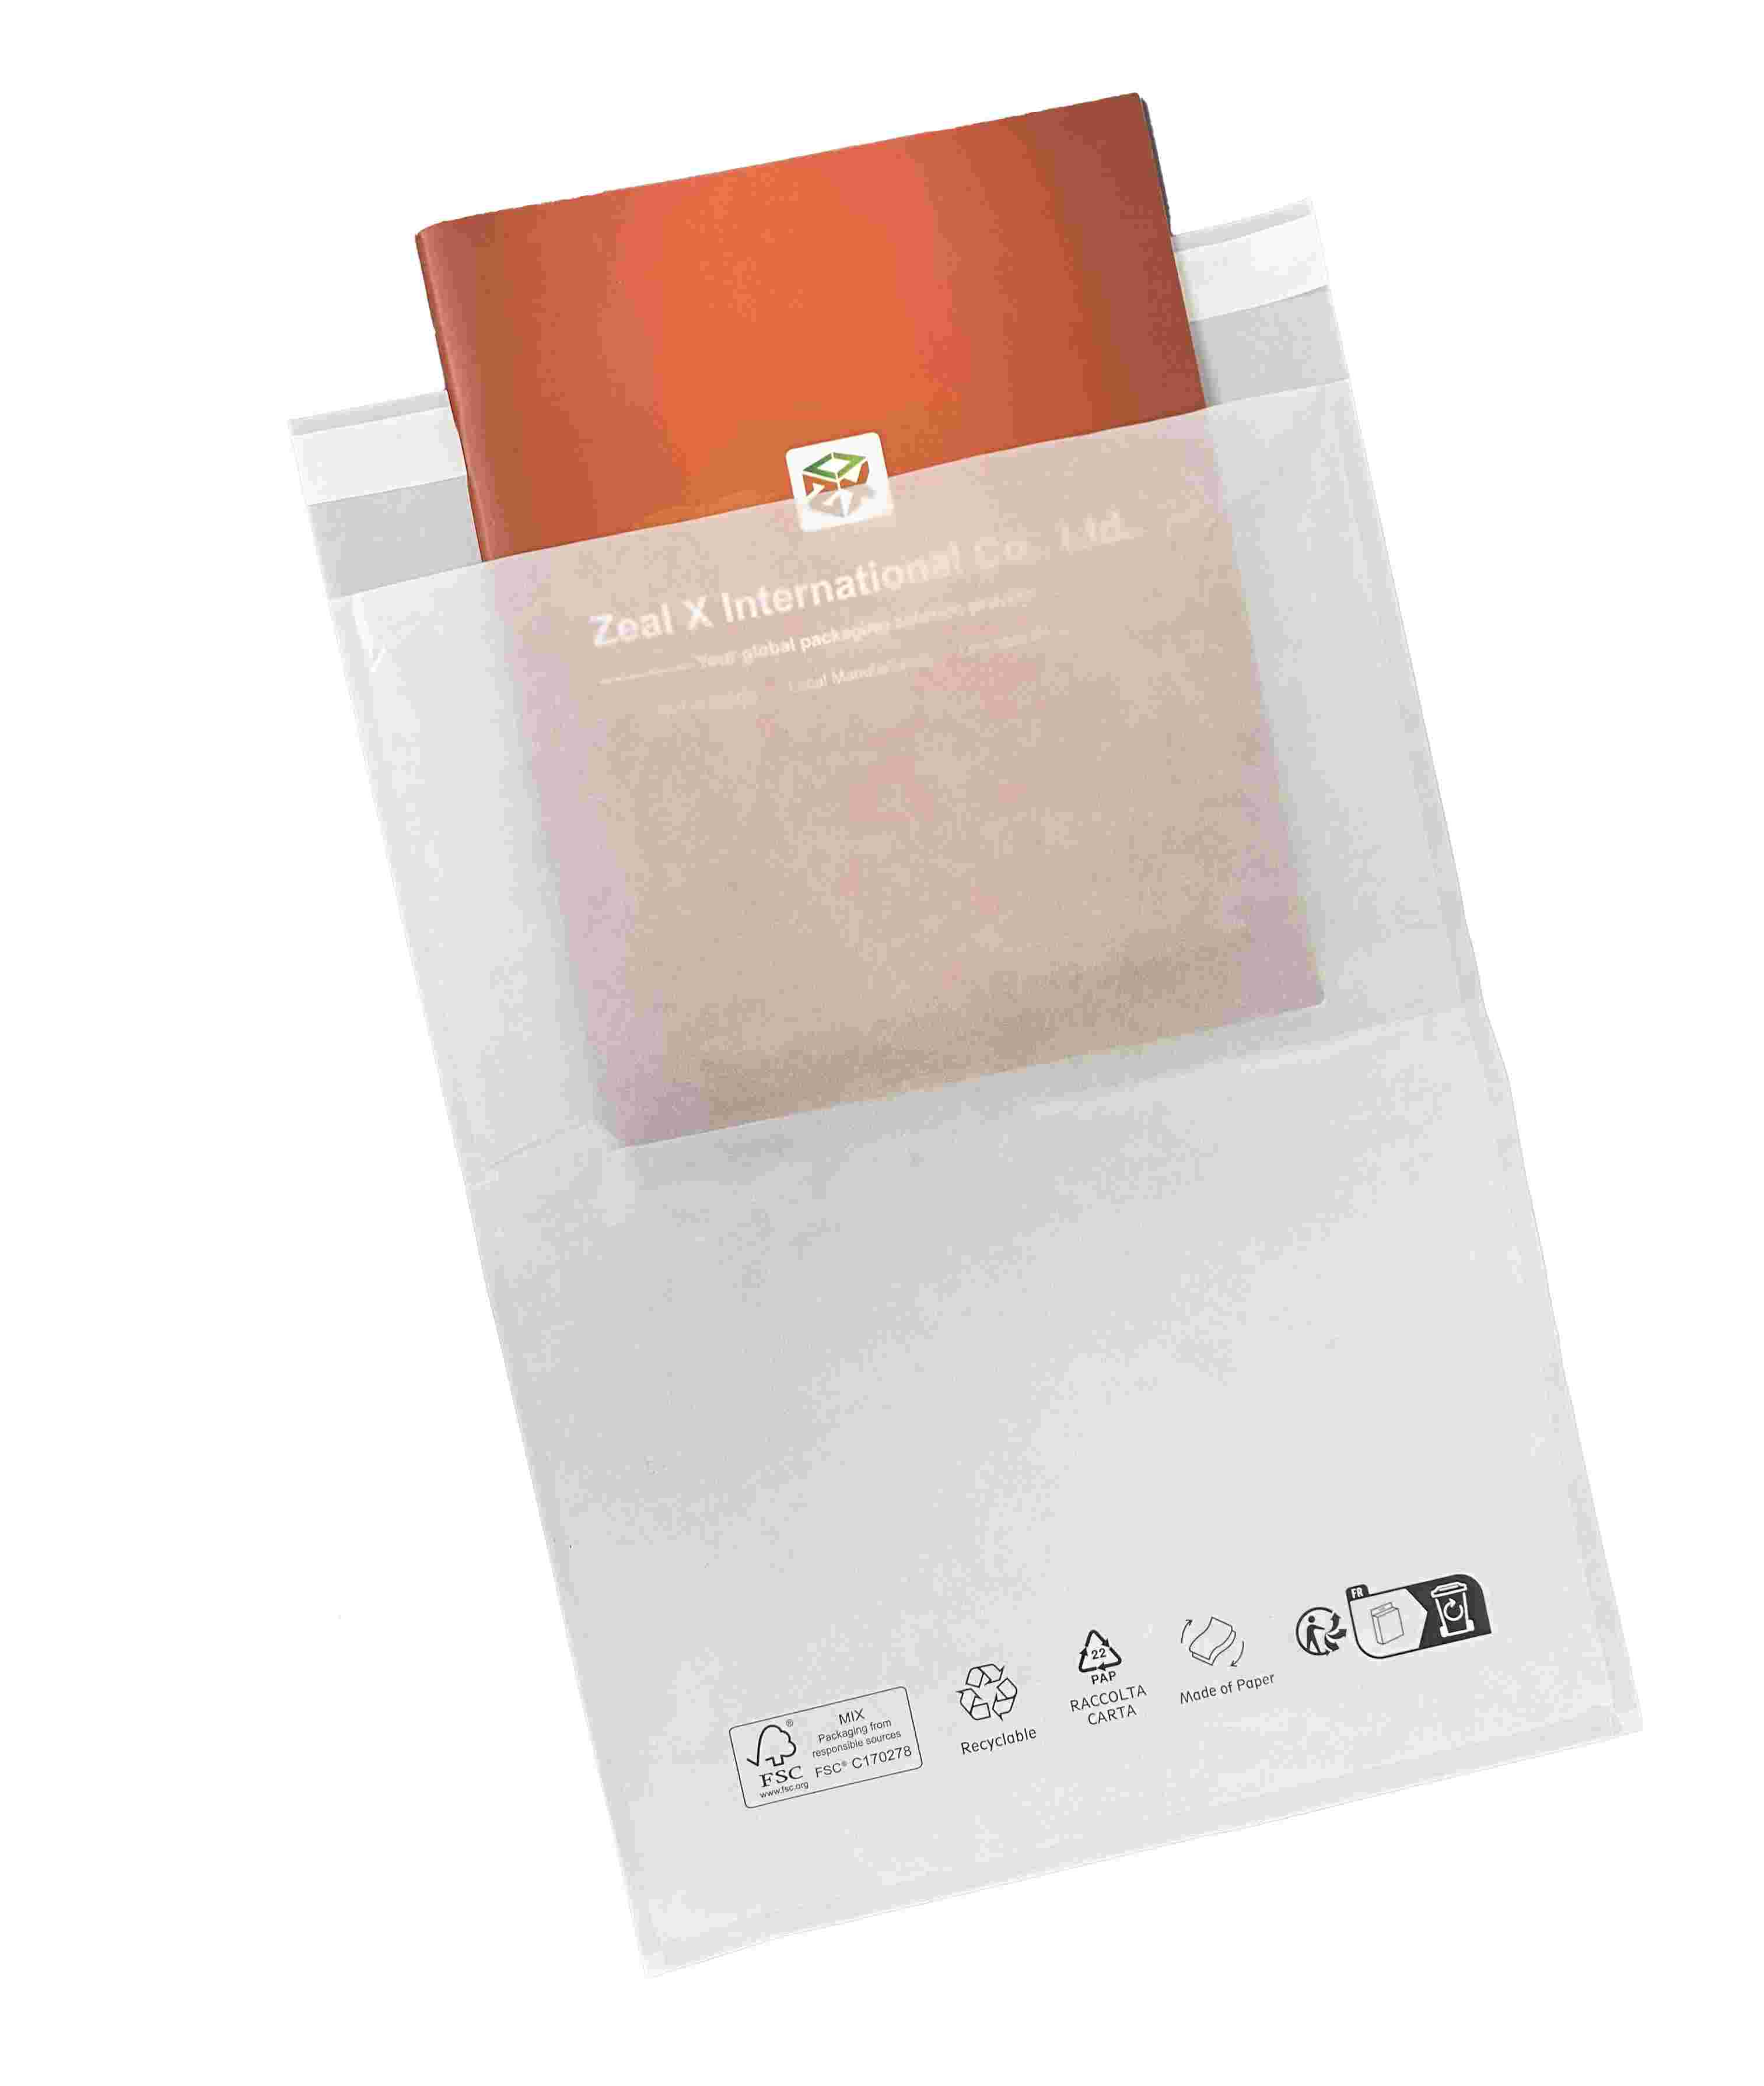 Glasin paper bag - No bottom